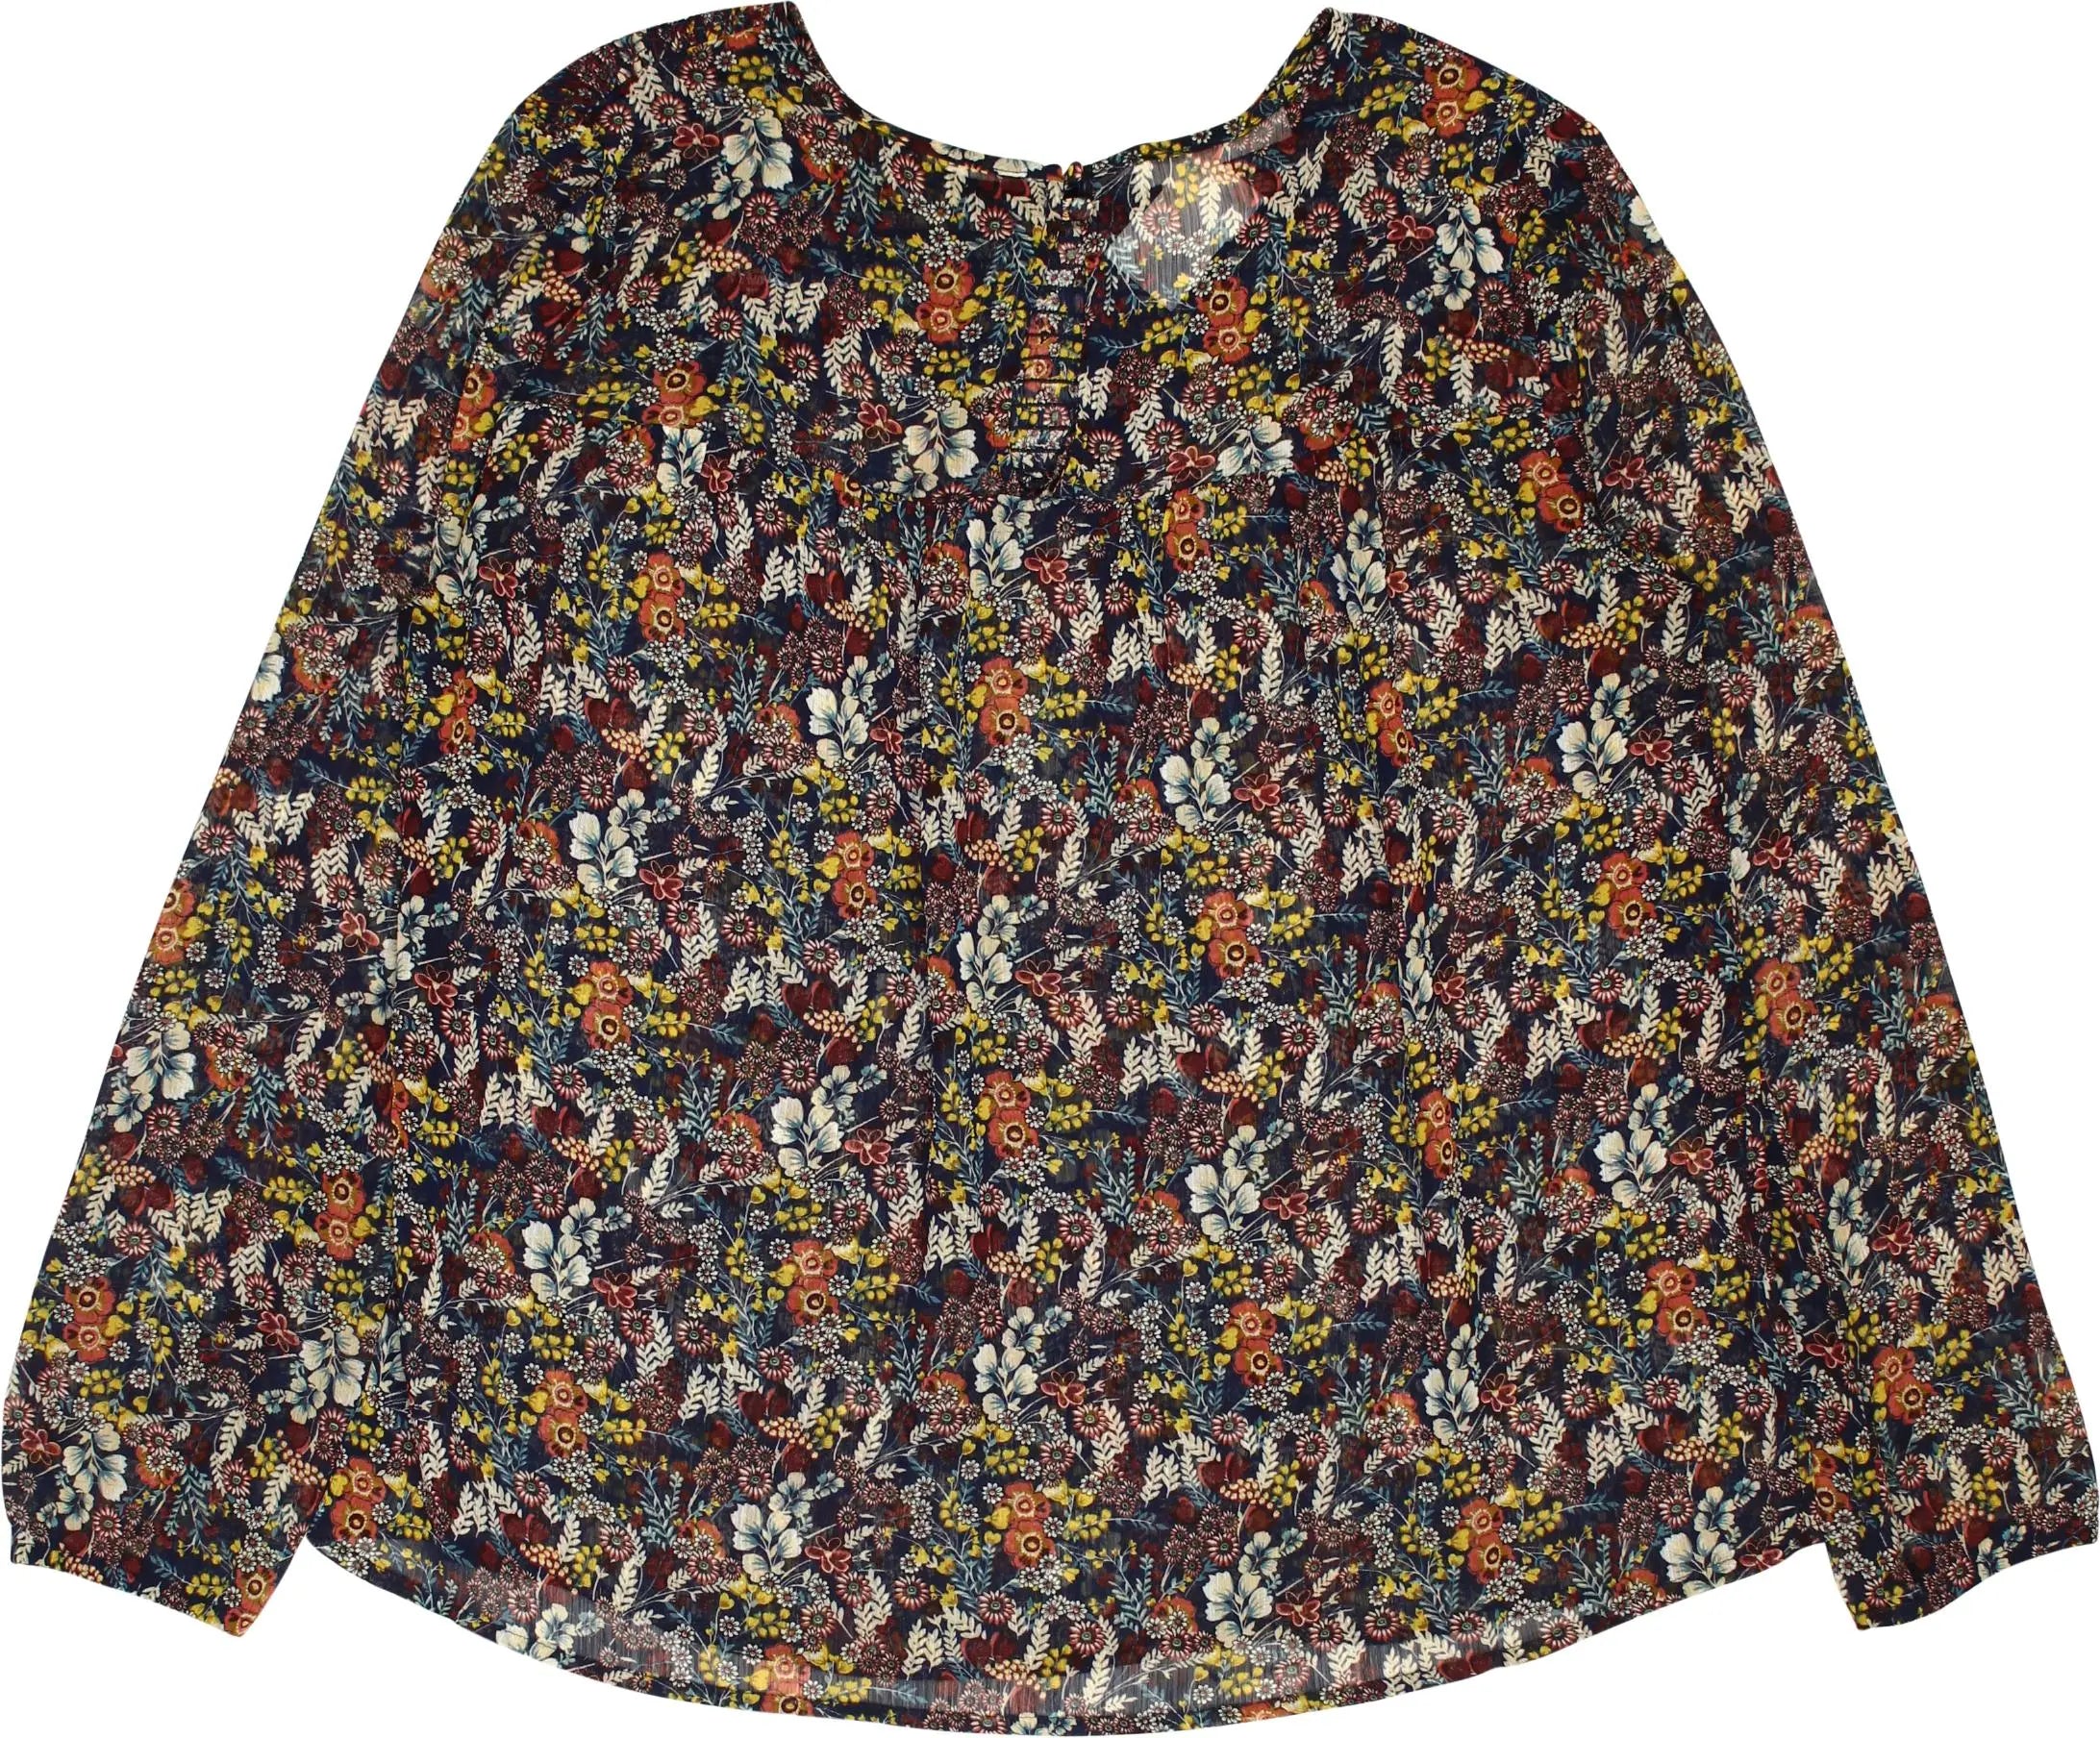 Promod - Floral Shirt- ThriftTale.com - Vintage and second handclothing